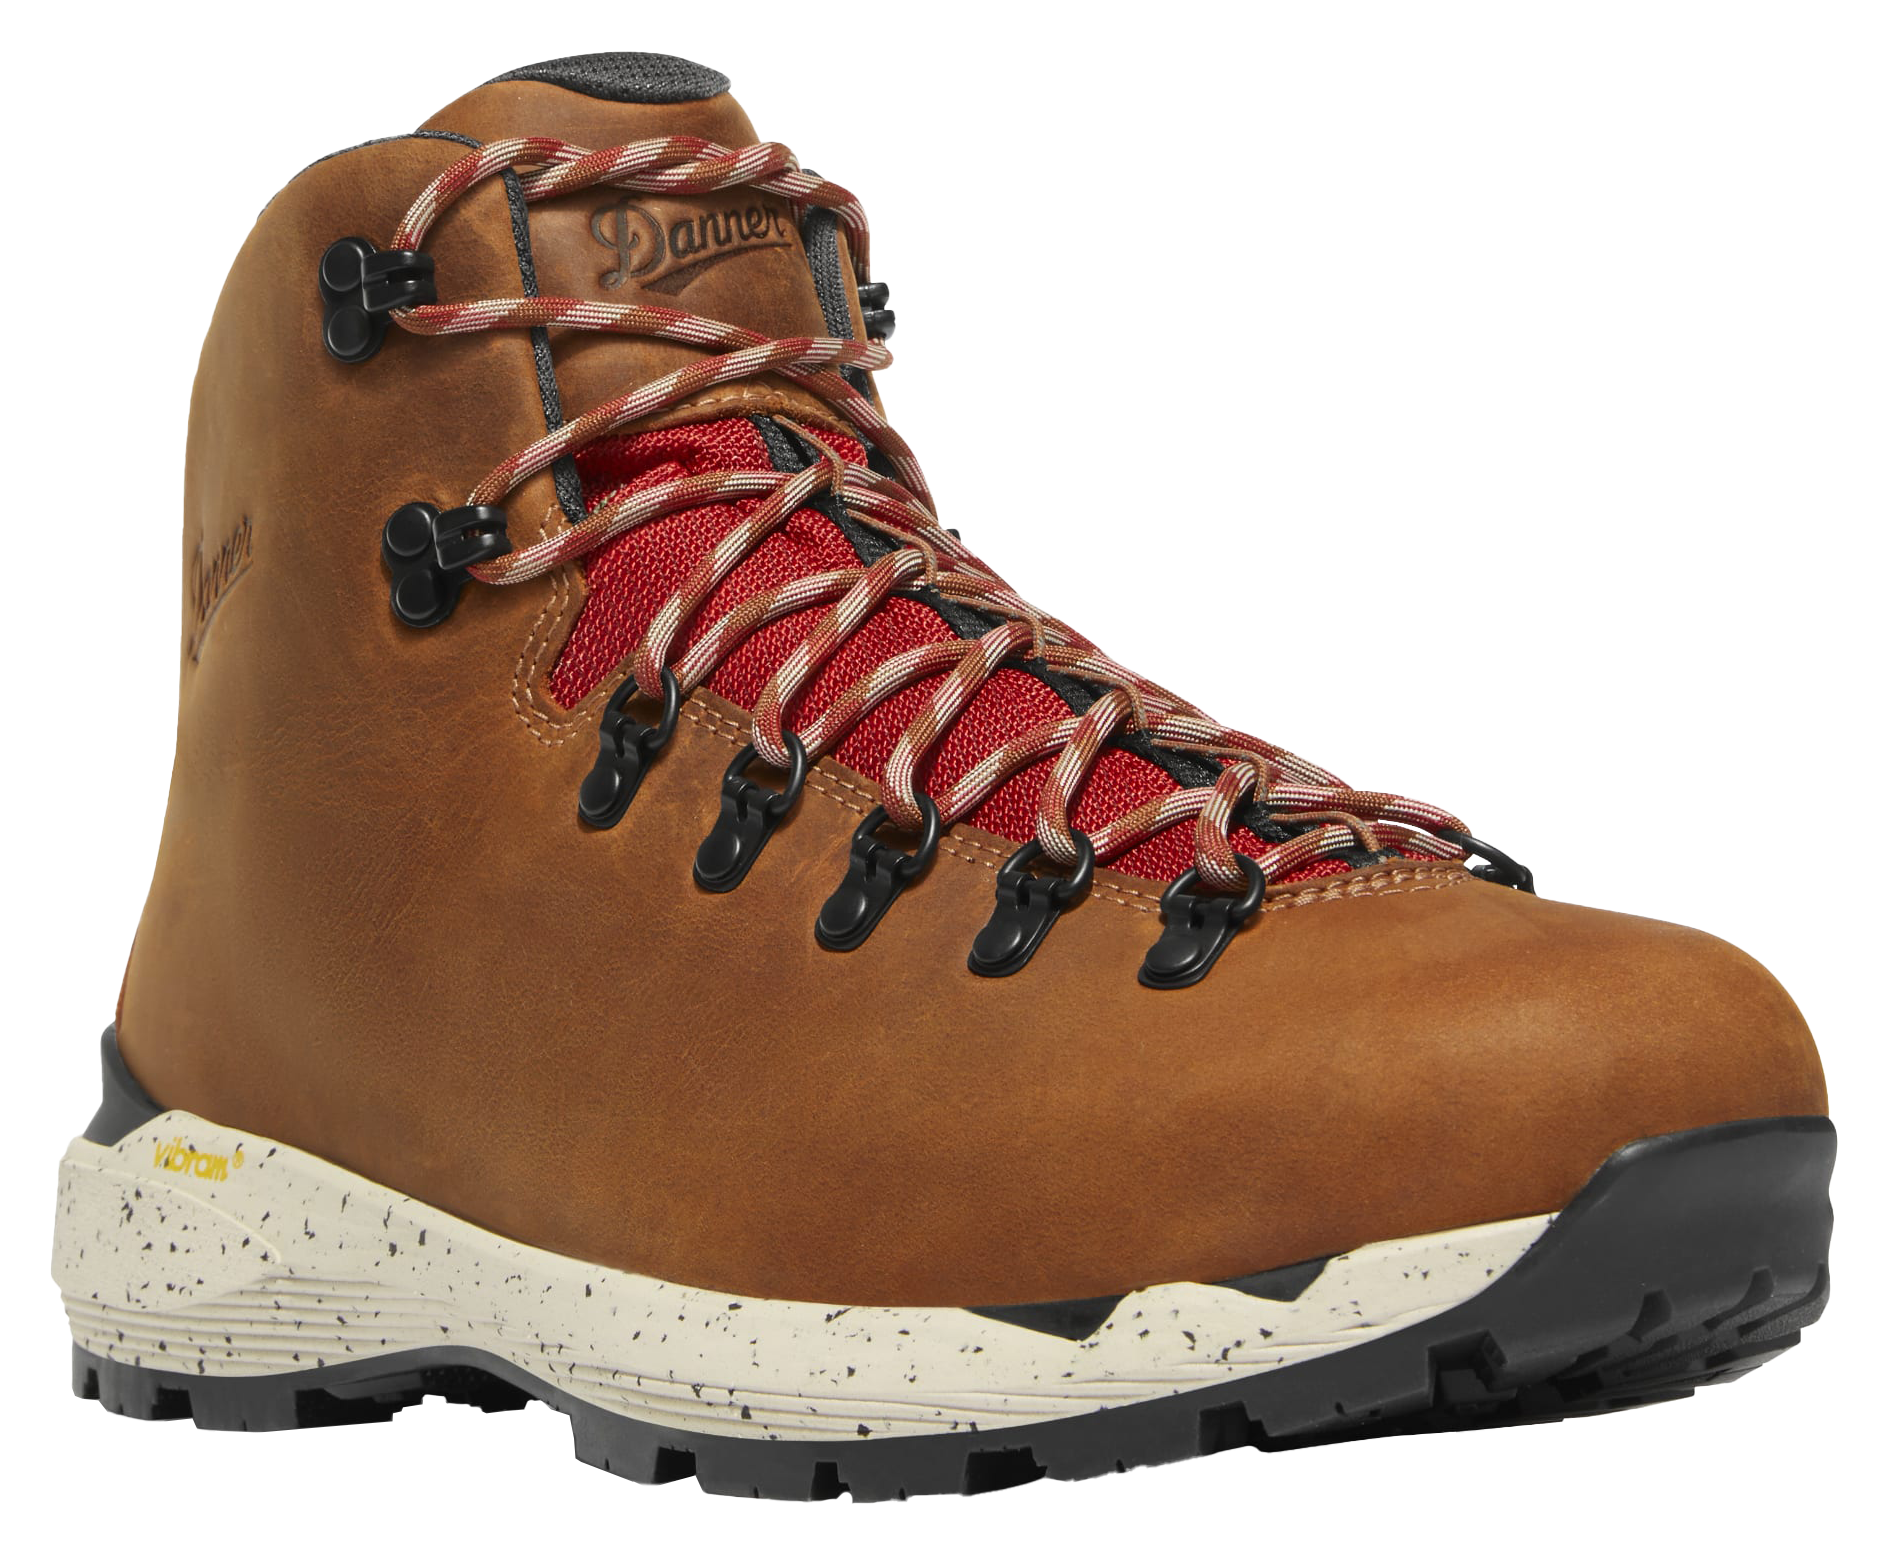 Danner Mountain 600 Evo GORE-TEX Hiking Boots for Men | Bass Pro Shops - Mocha Brown/Rhodo Red - 9W